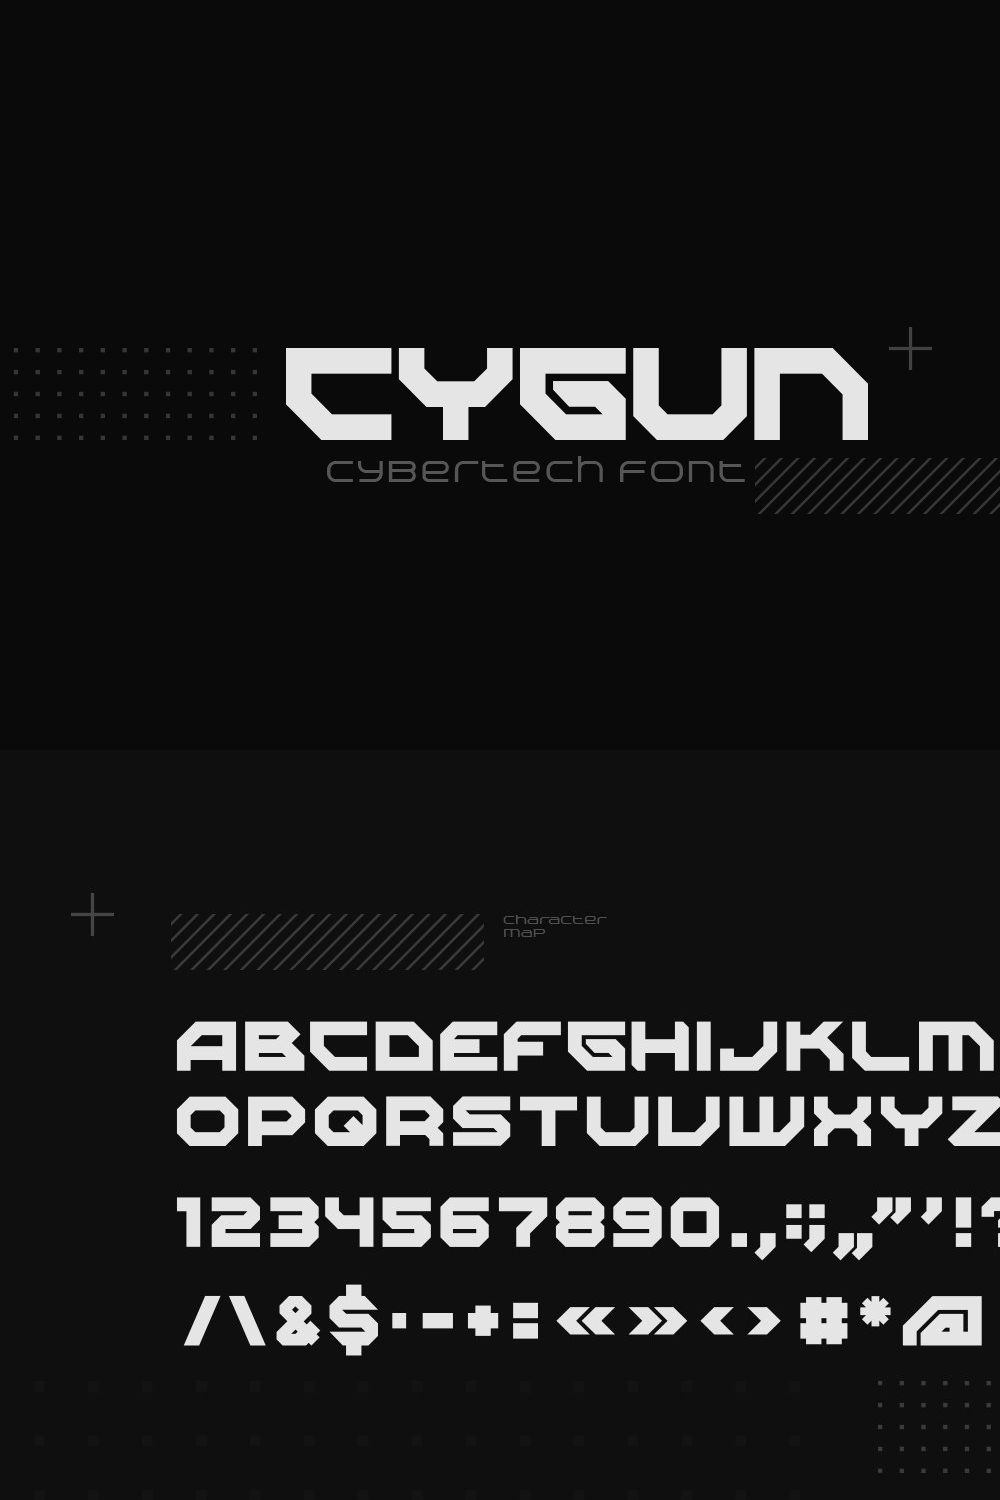 CYGUN Font pinterest preview image.